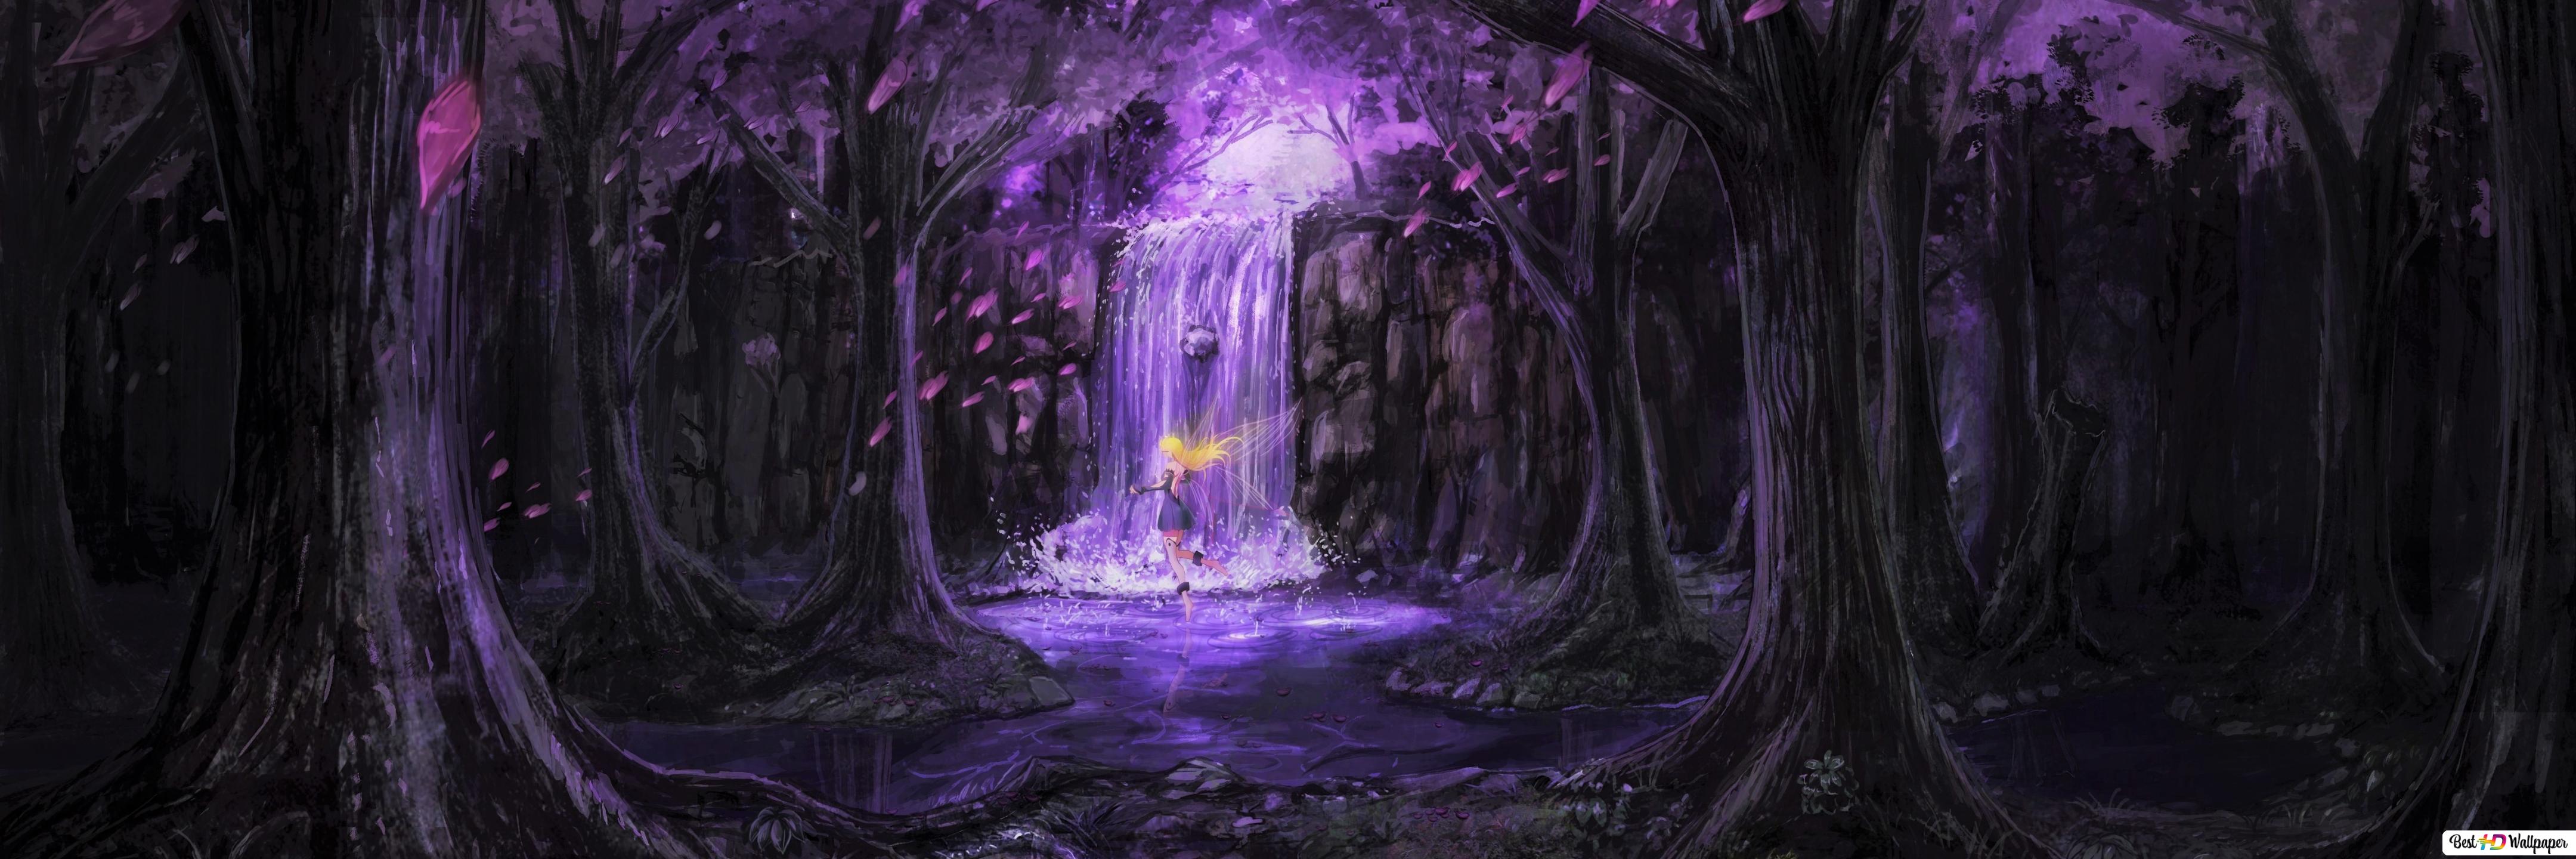 Fairy in Purple Fantasy Forest HD wallpaper download